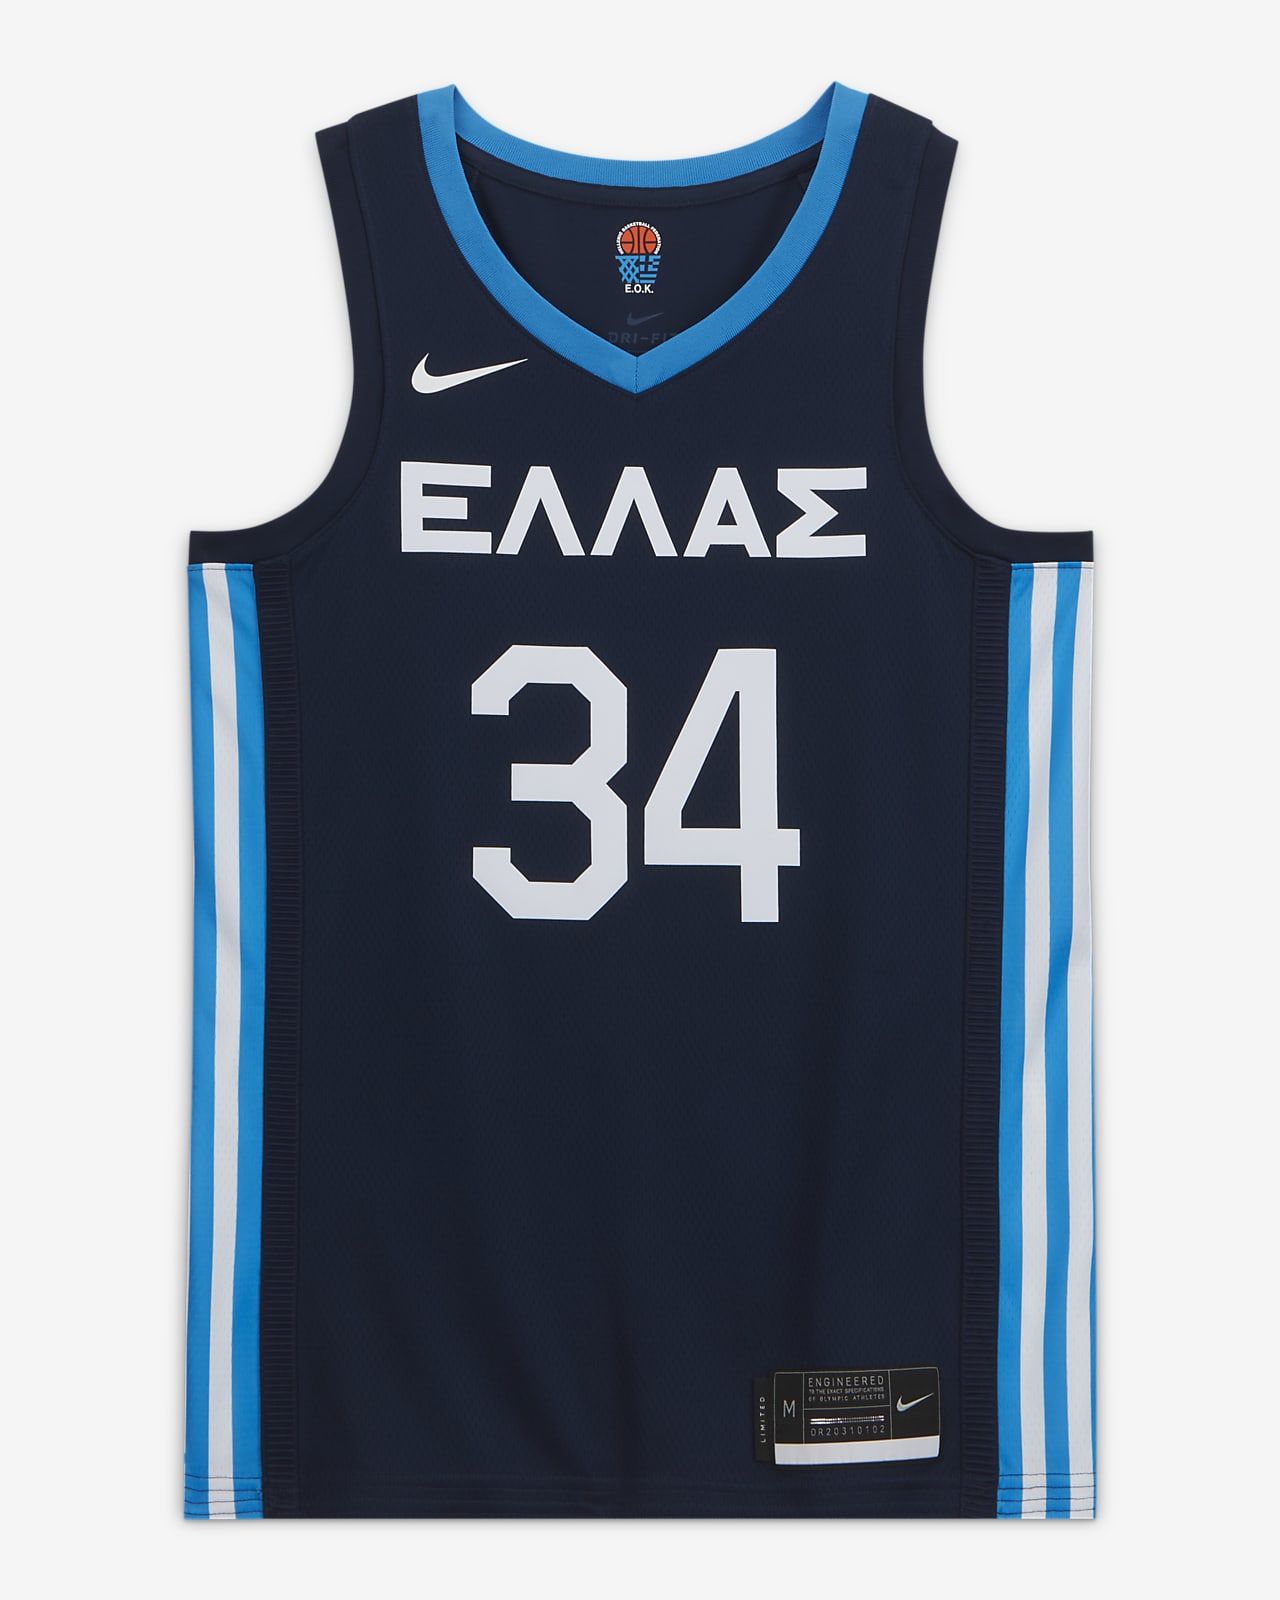 Greece (Road) Nike Limited Men's Basketball Jersey